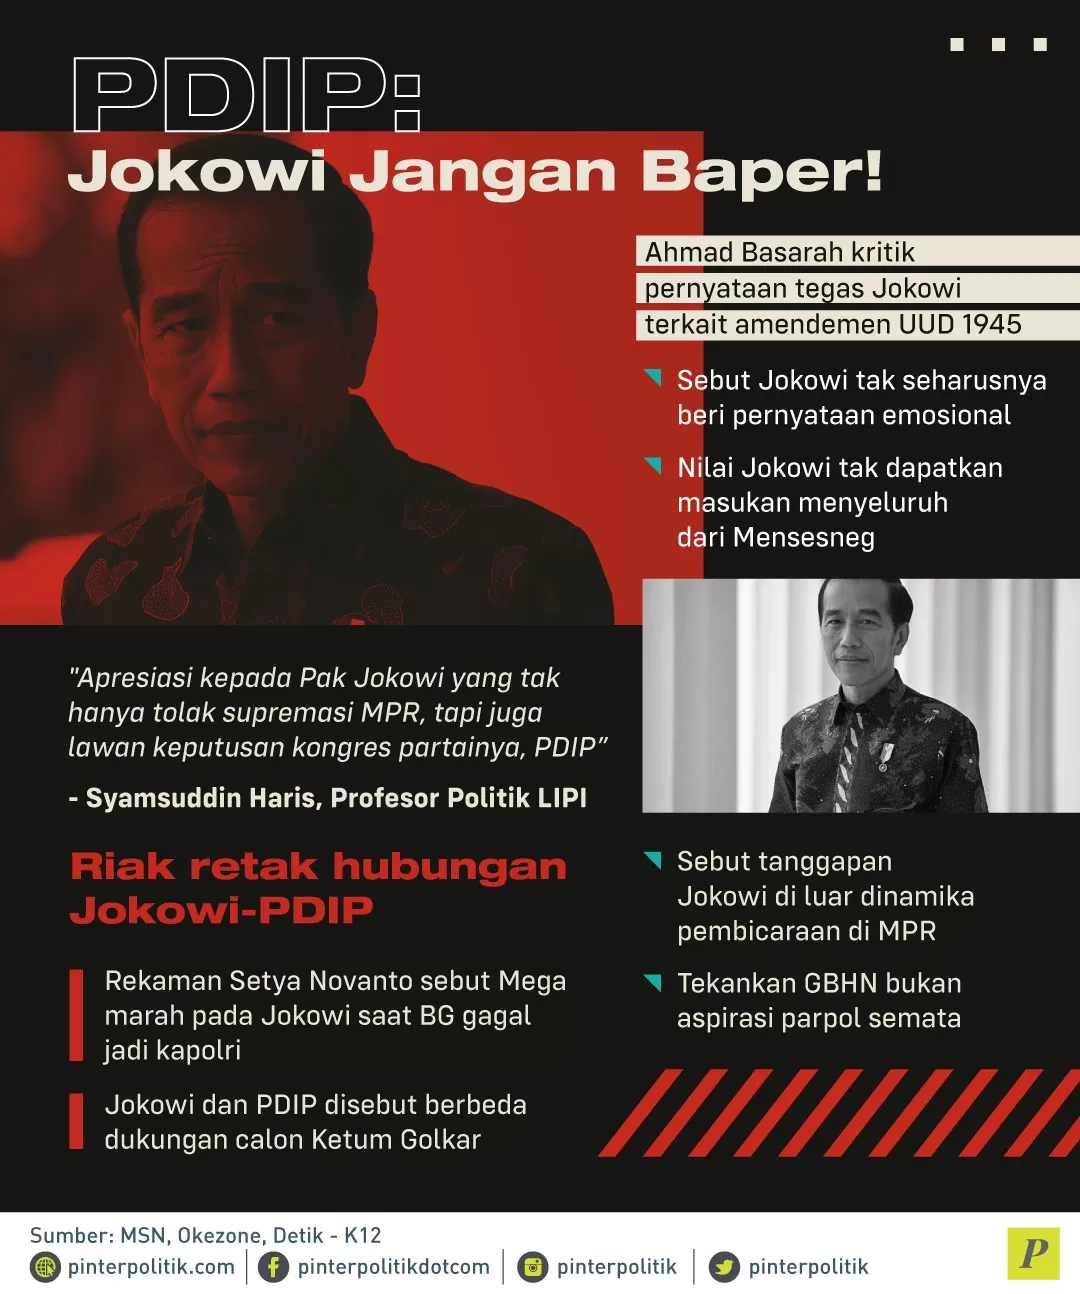 hubungan Jokowi PDIP terkait Amandemen UUD 1945